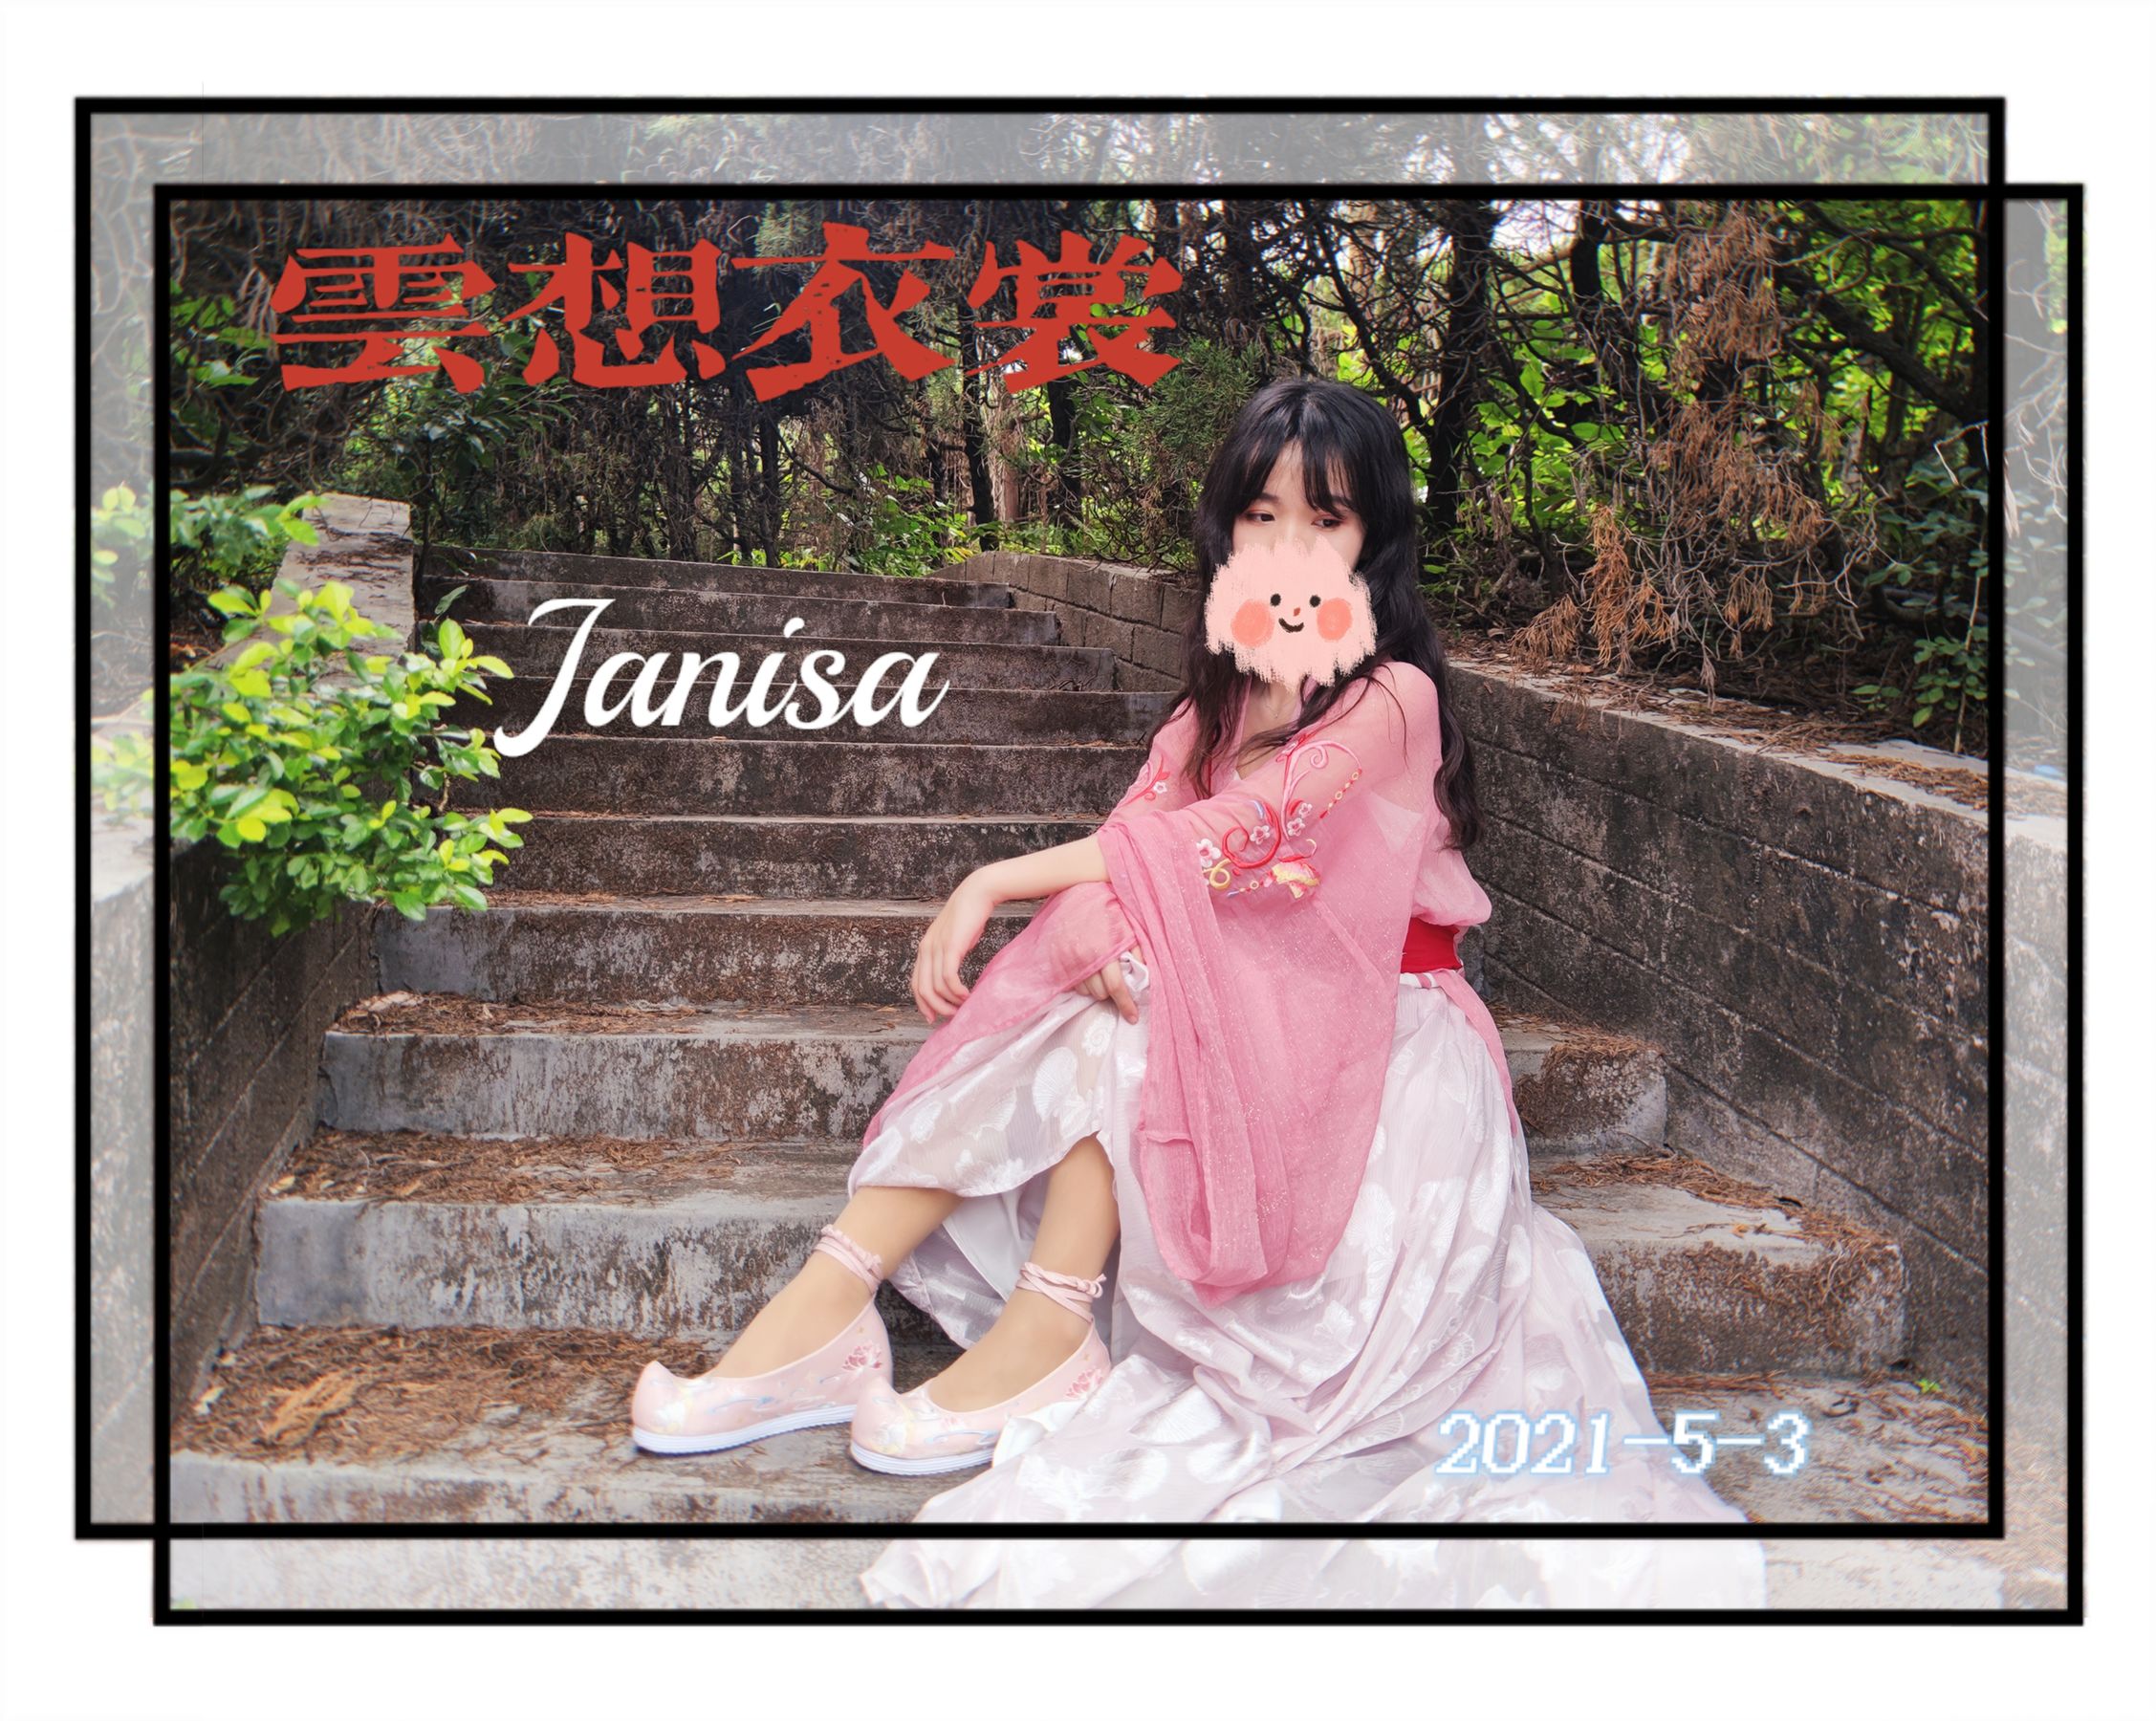 Janisa - 云想衣裳-喵次元